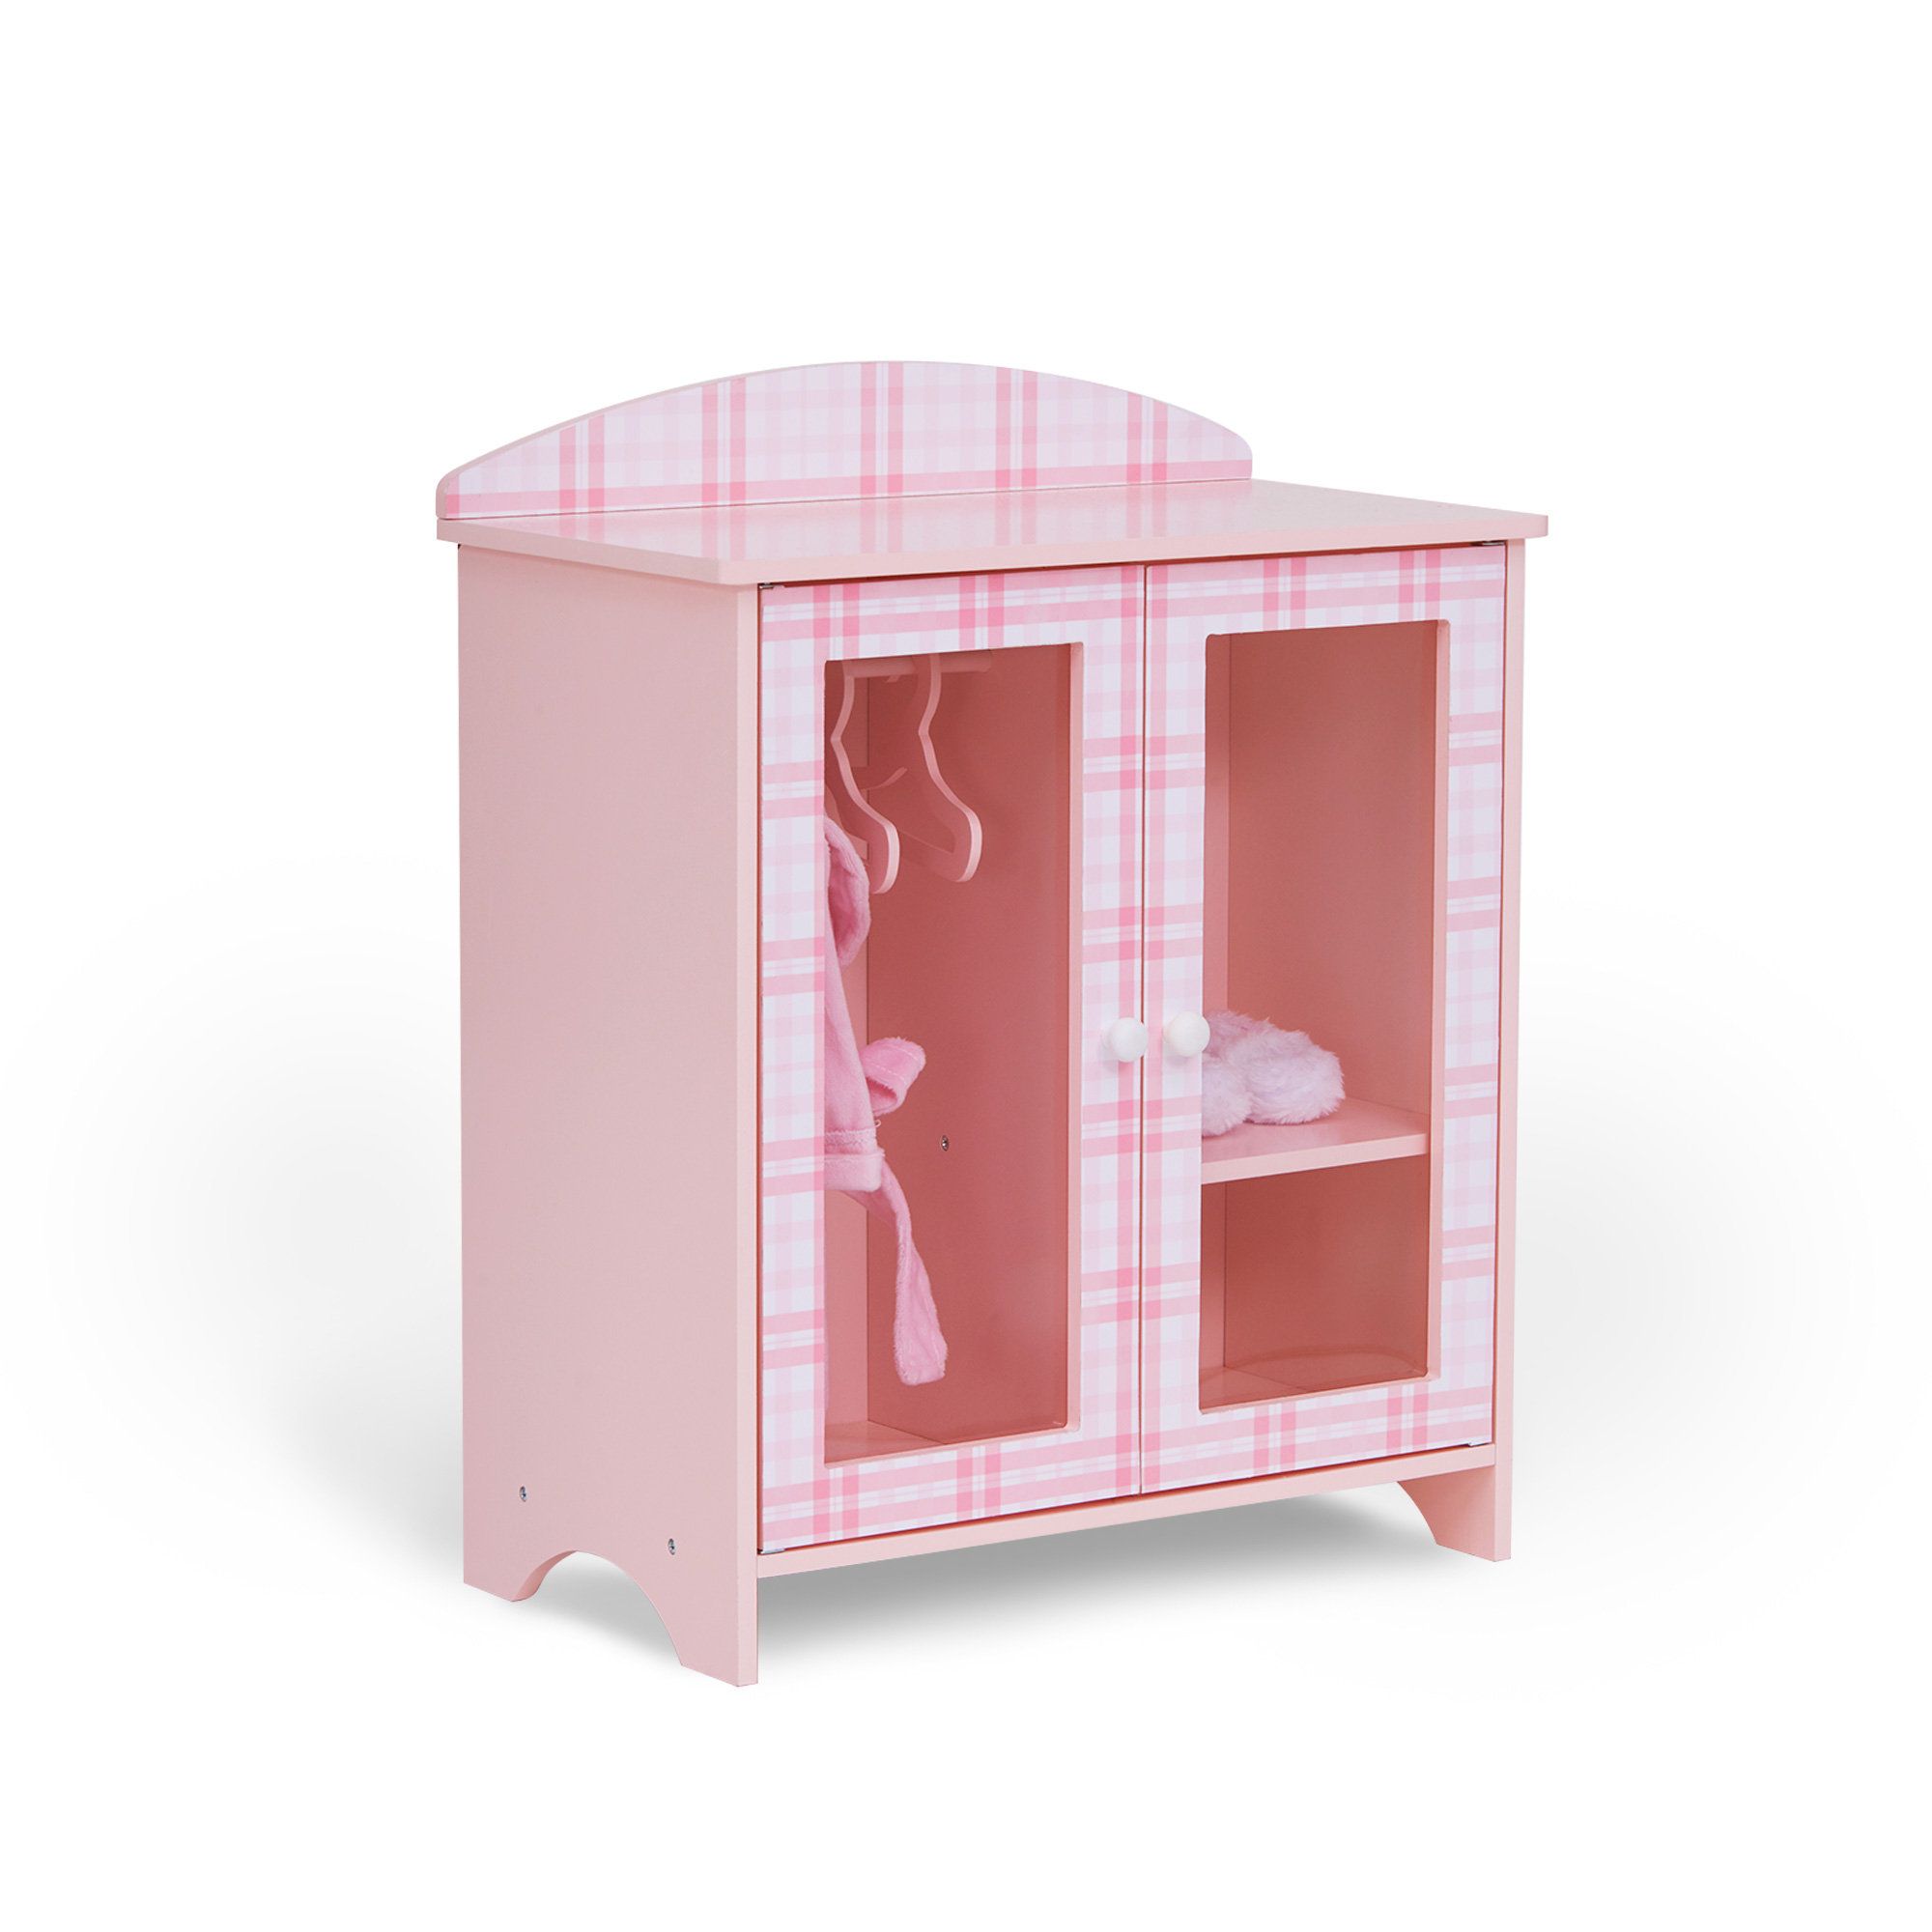 Sophia's Princess Closet Dollhouse Furniture And Accessories | Wayfair Inside Princess Wardrobes (Gallery 15 of 20)